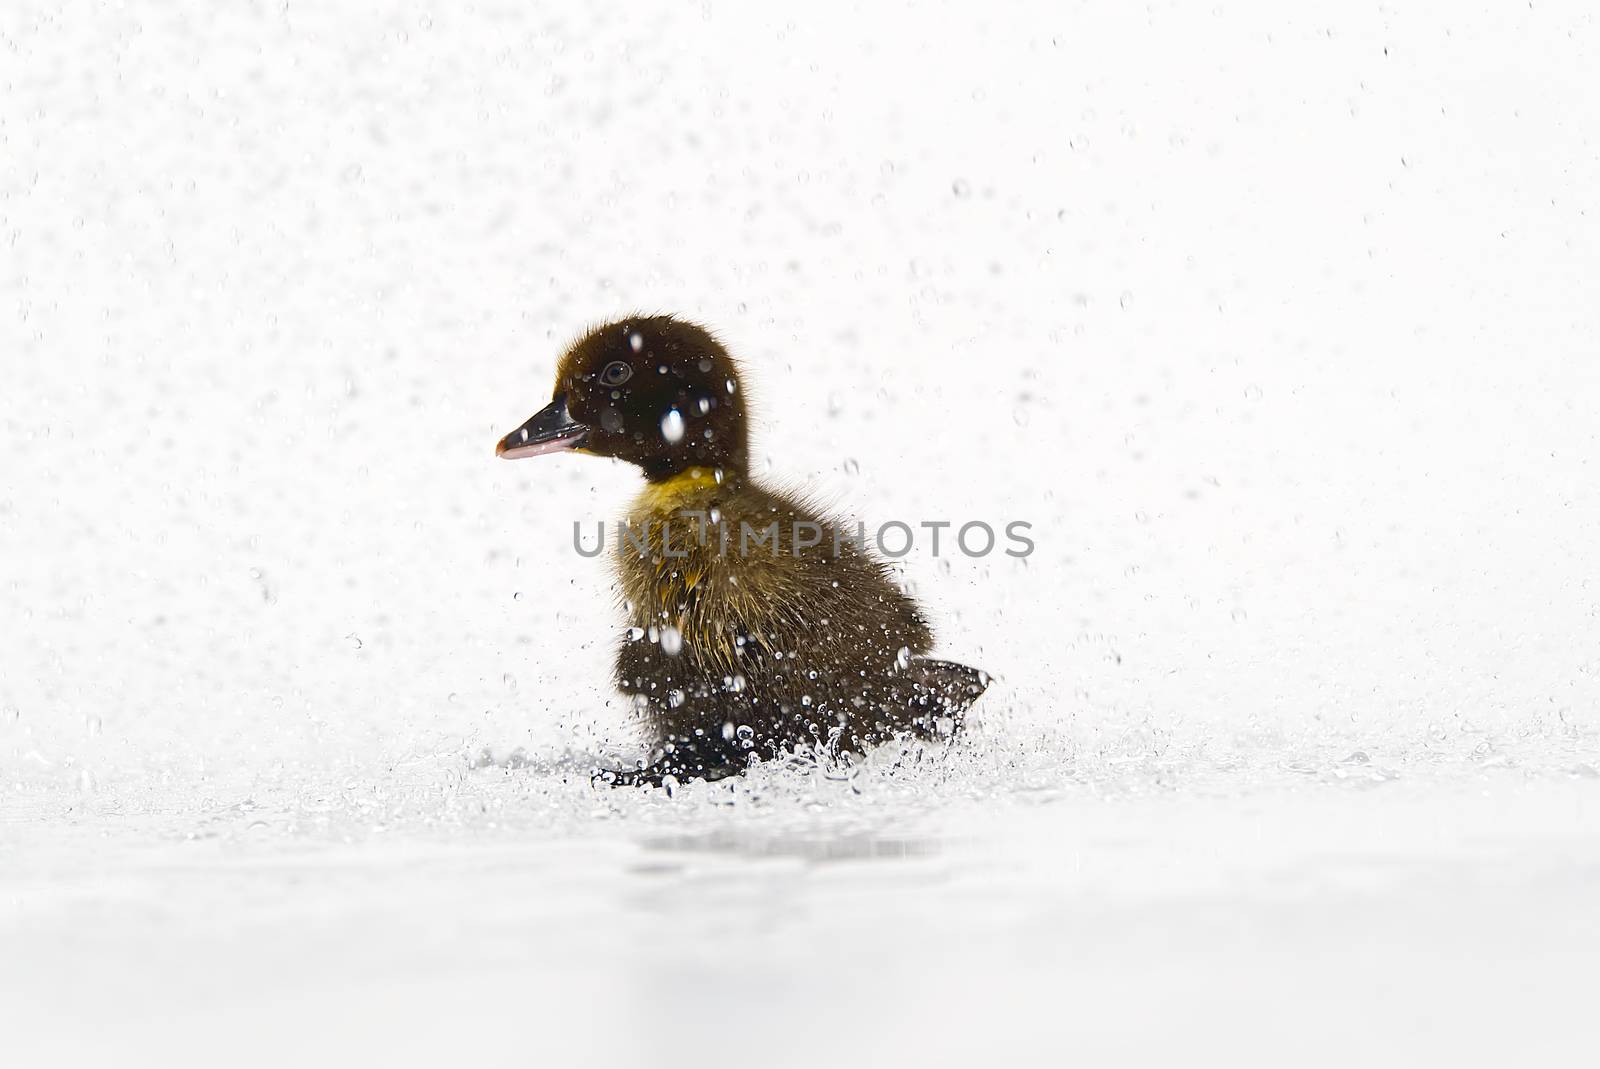 Brown newborn little cute wet duckling under rain drops on white background. by PhotoTime